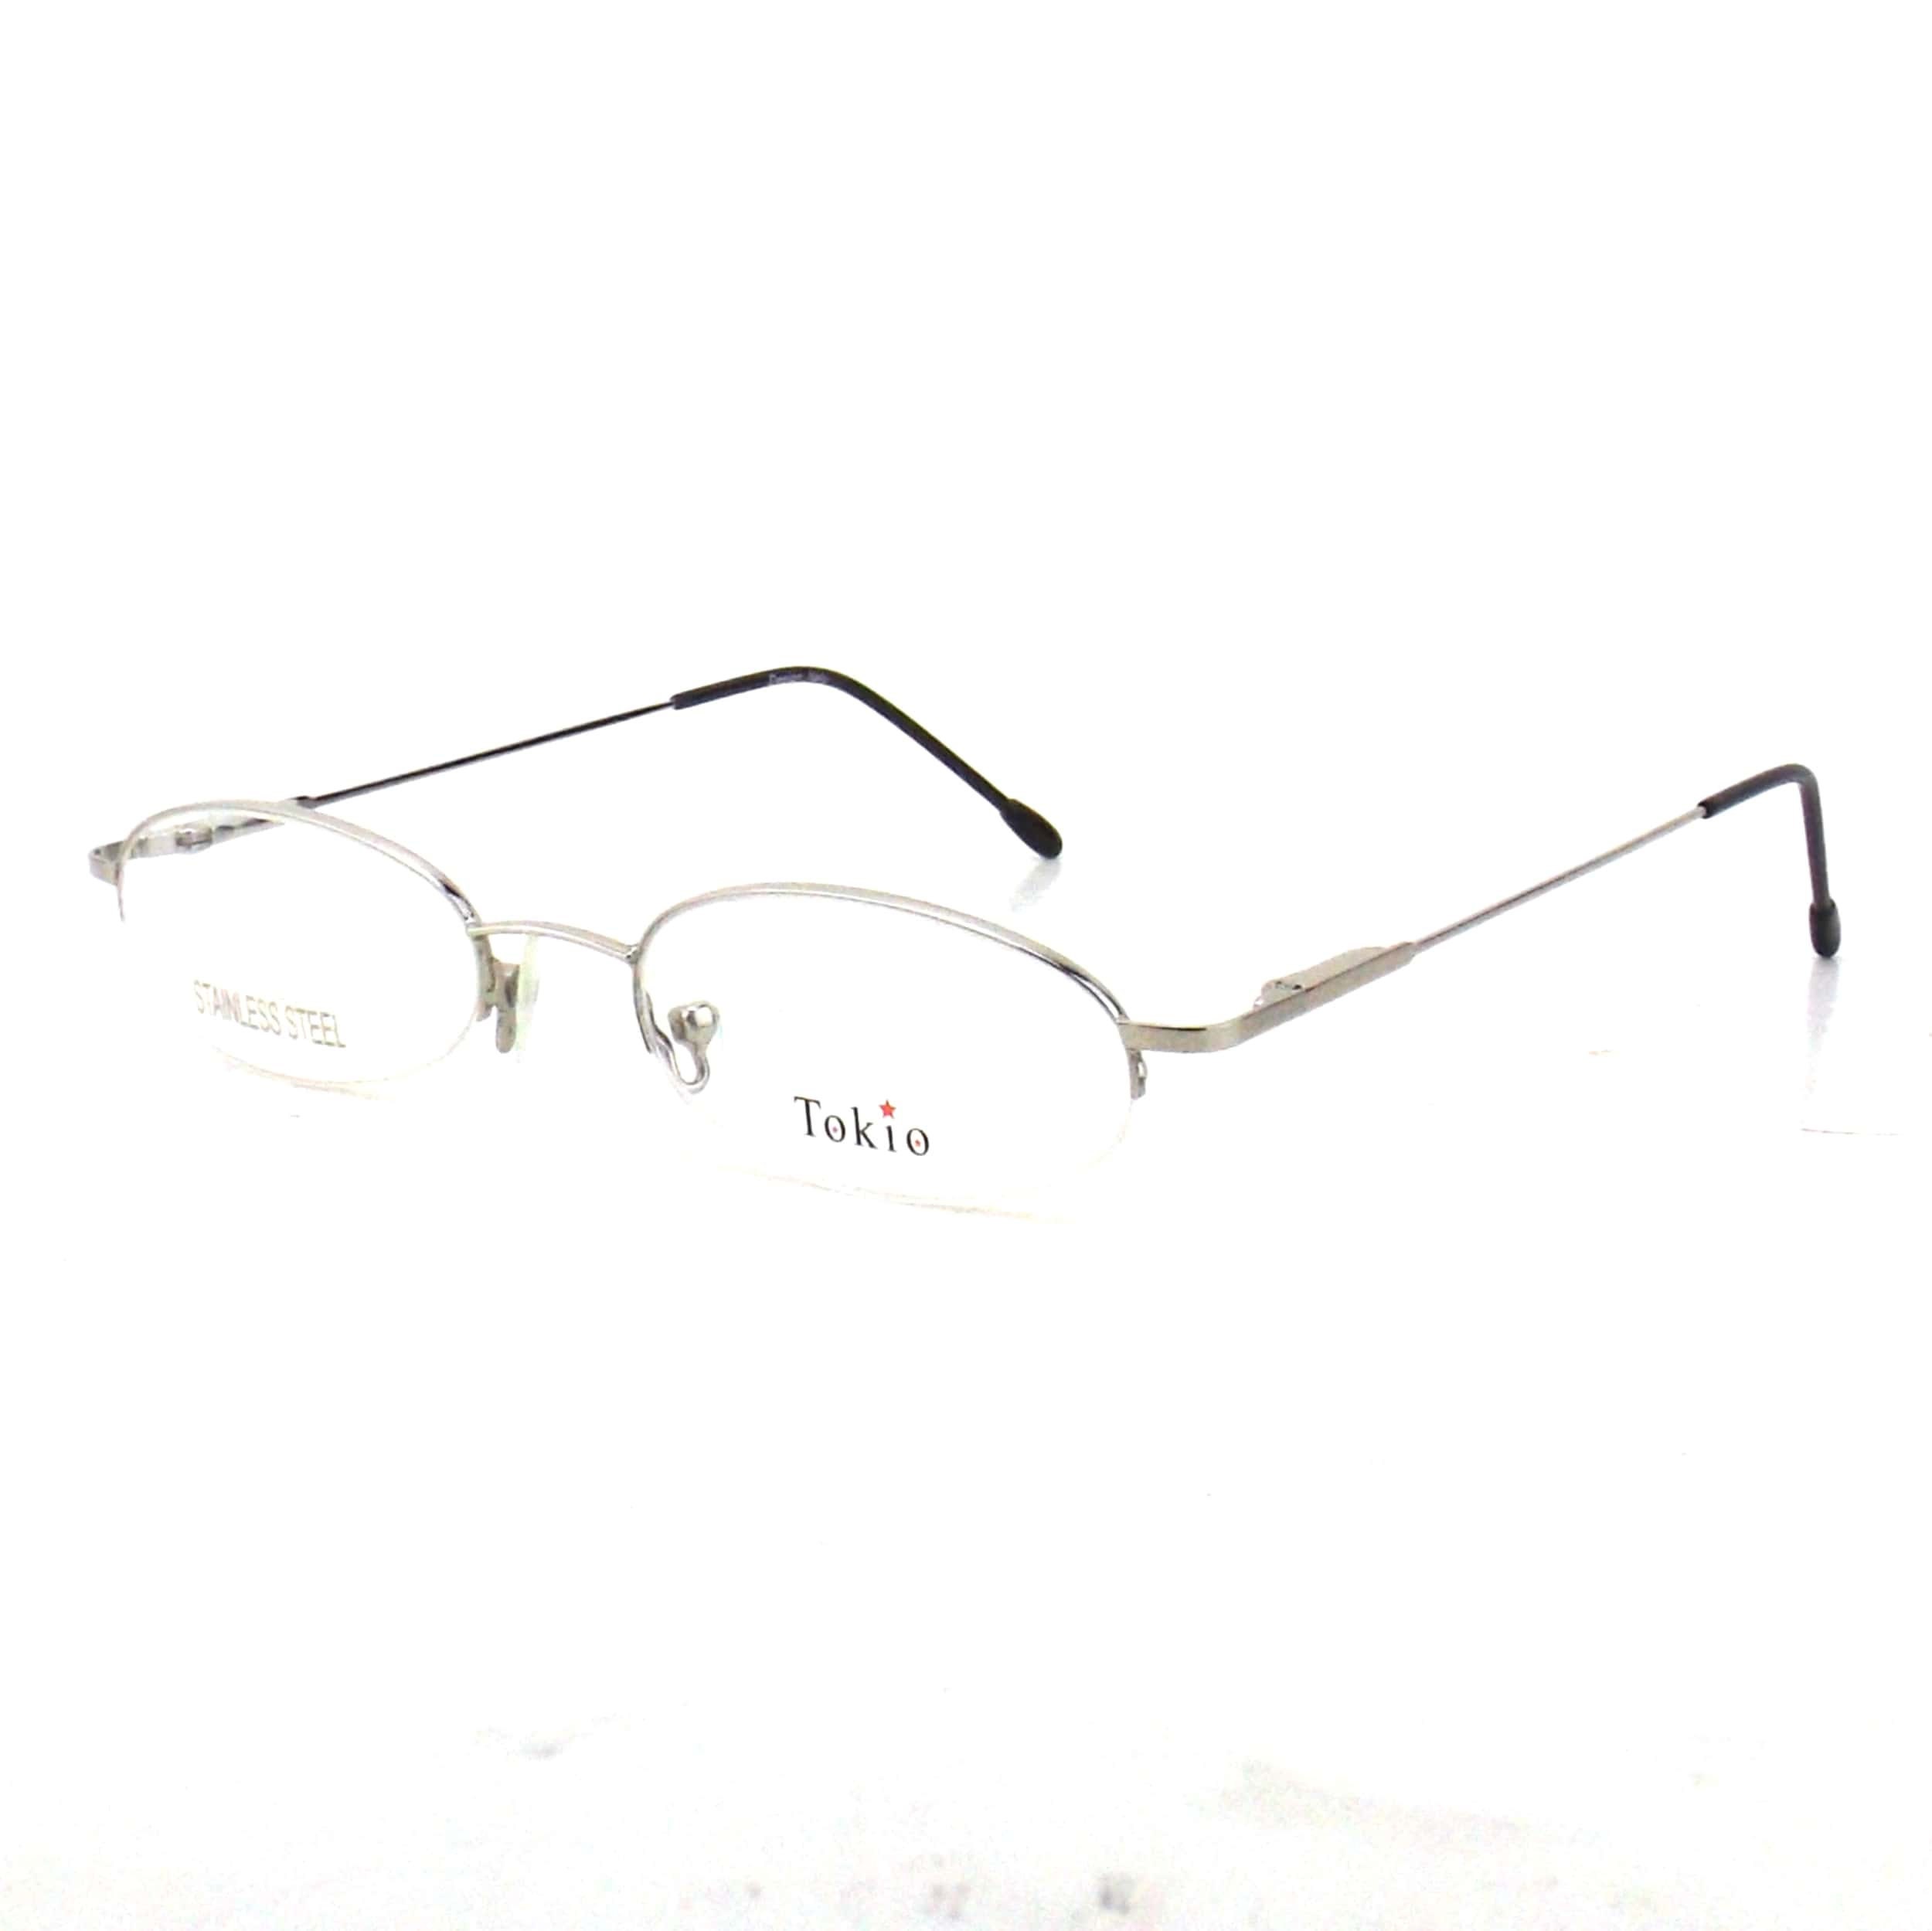 Vintage half rim eyeglasses oval eye glasses matte brown | Etsy